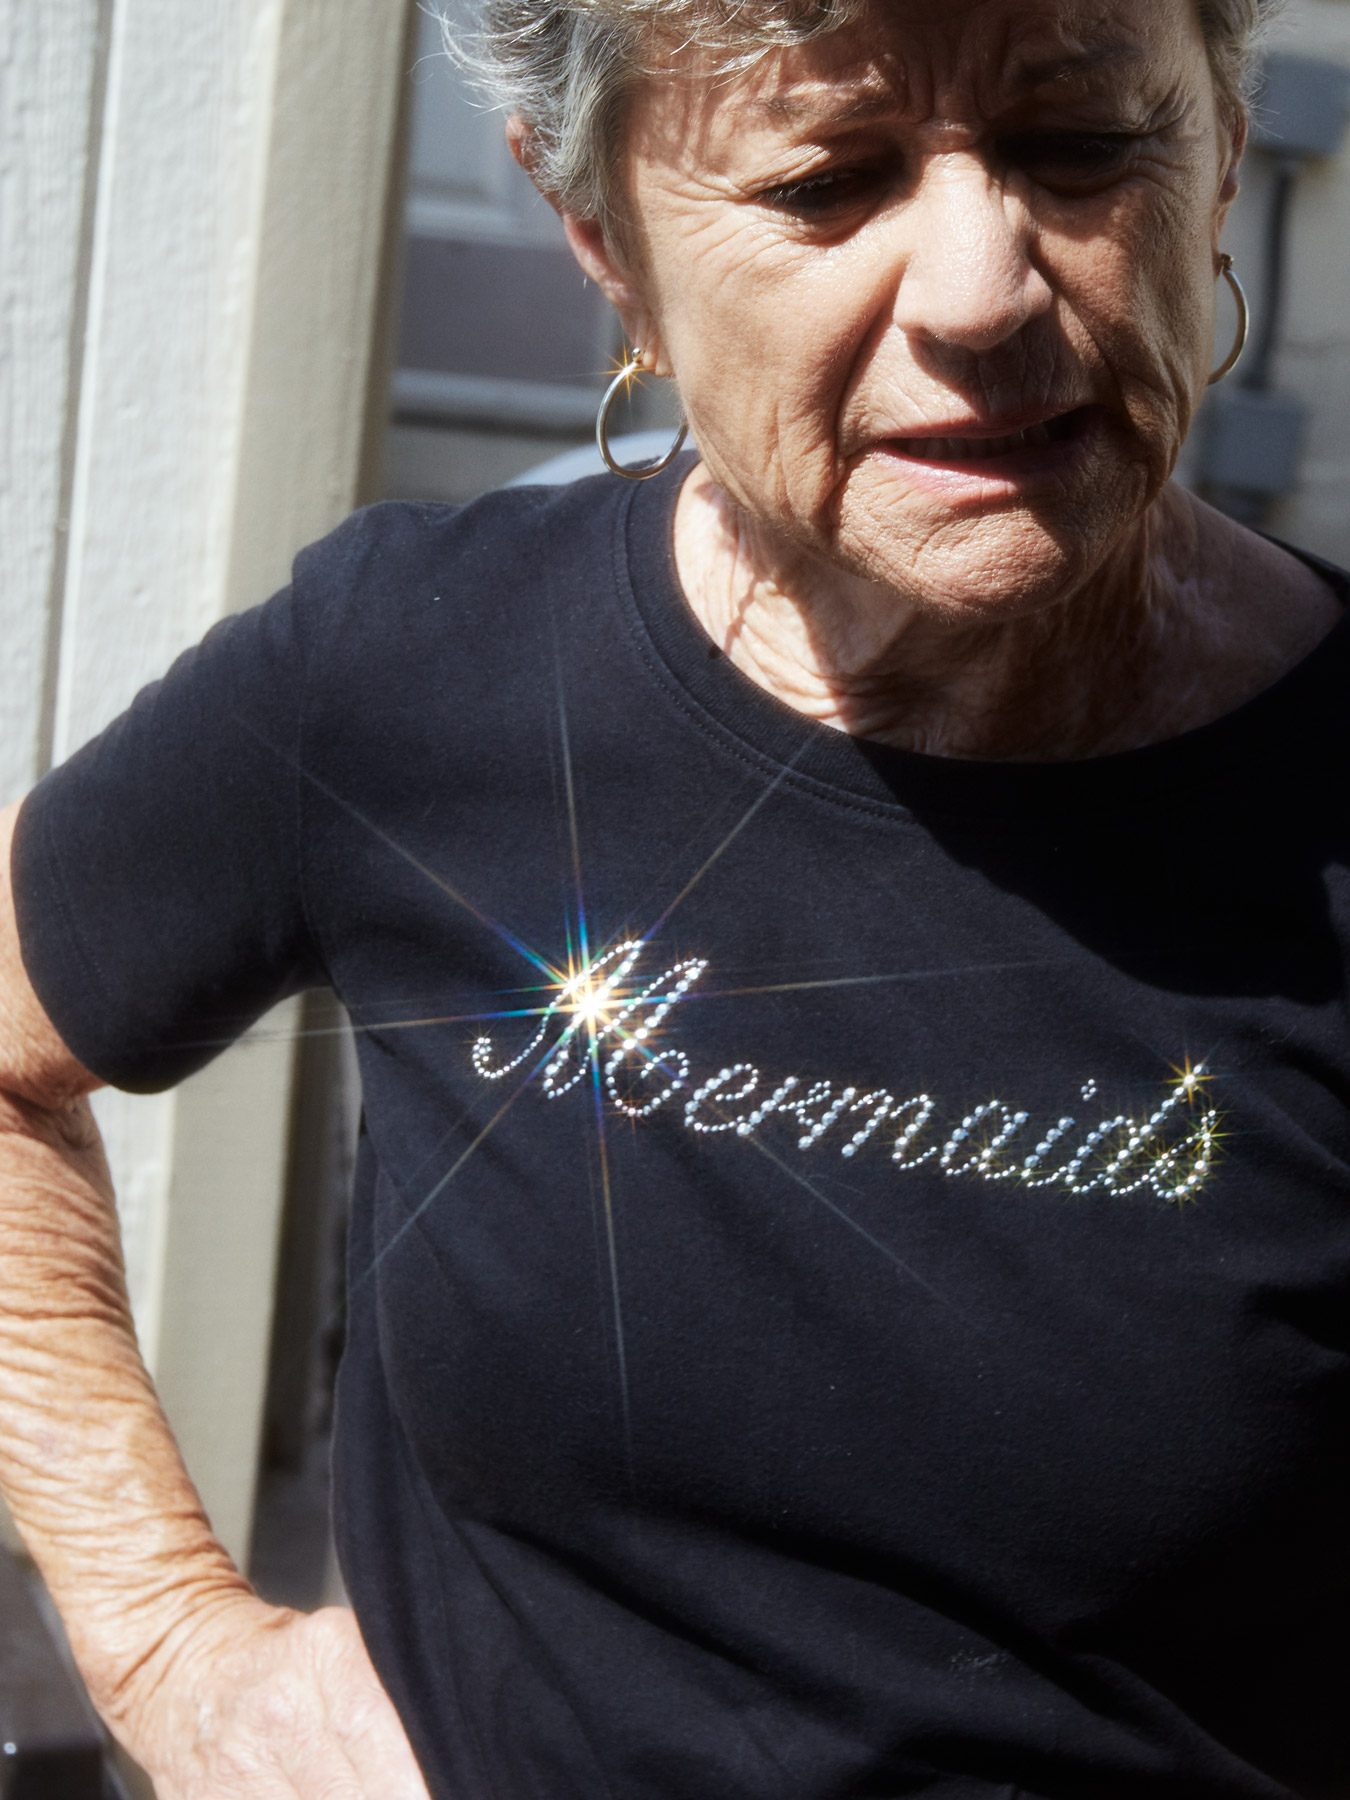 glorious mermaids charlie engman florida older woman portrait with rhinestones on shirt